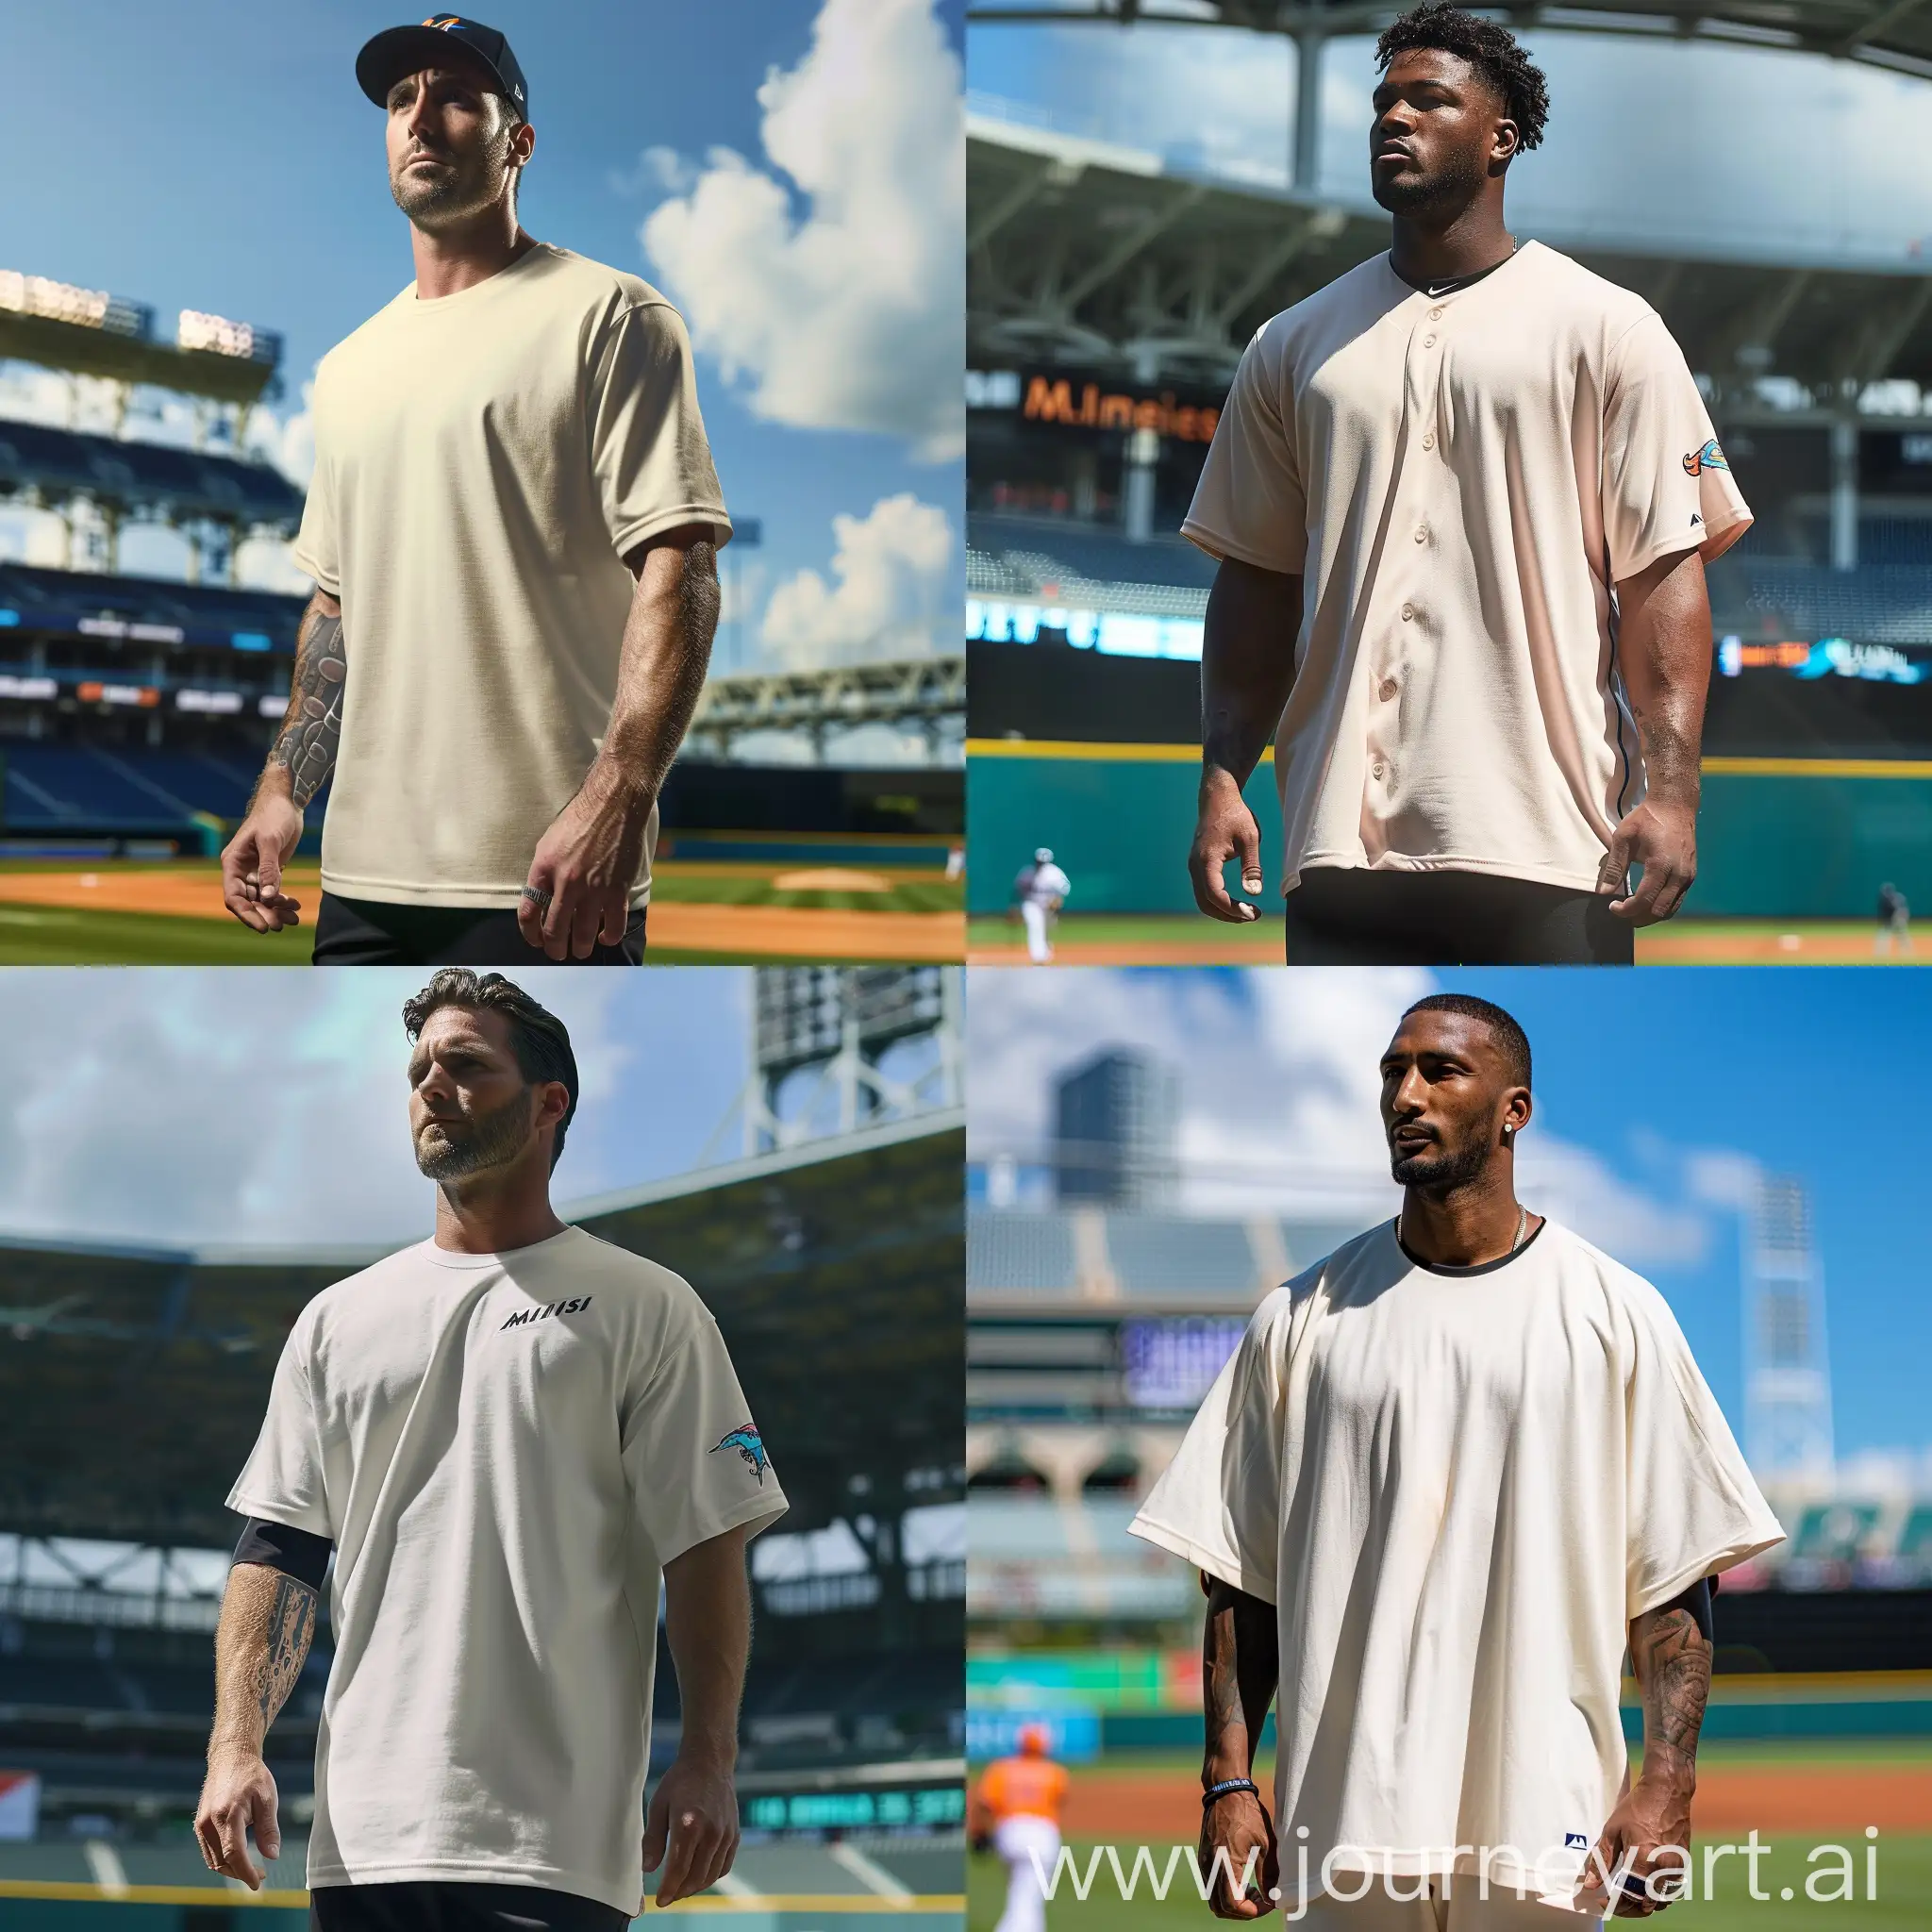 Miami-Marlins-Baseball-Player-Ian-Lewis-in-Cream-Oversized-TShirt-on-Field